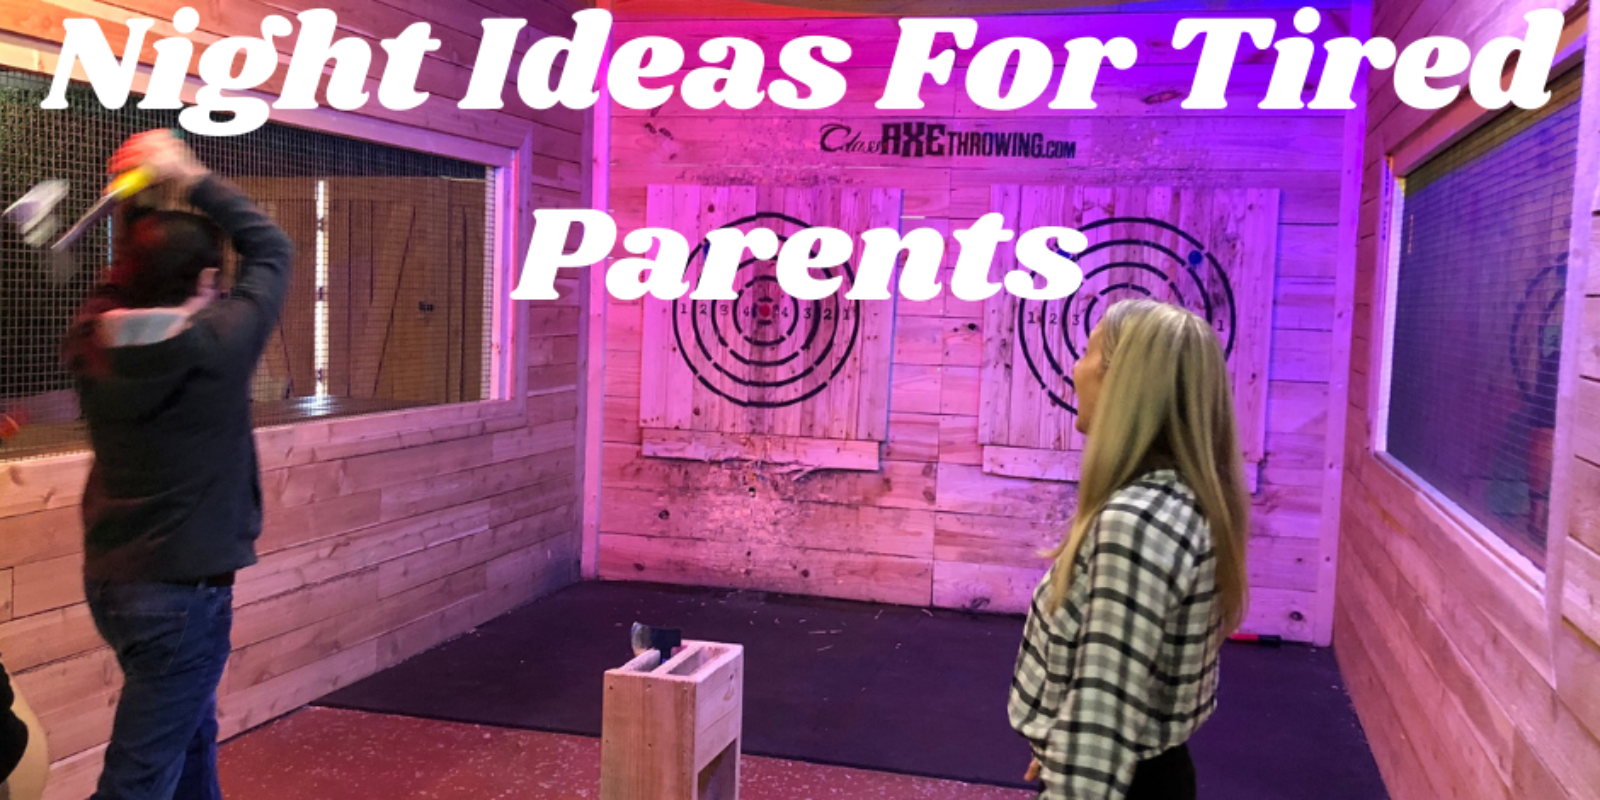 Unique Austin Date Night Ideas For Tired Parents